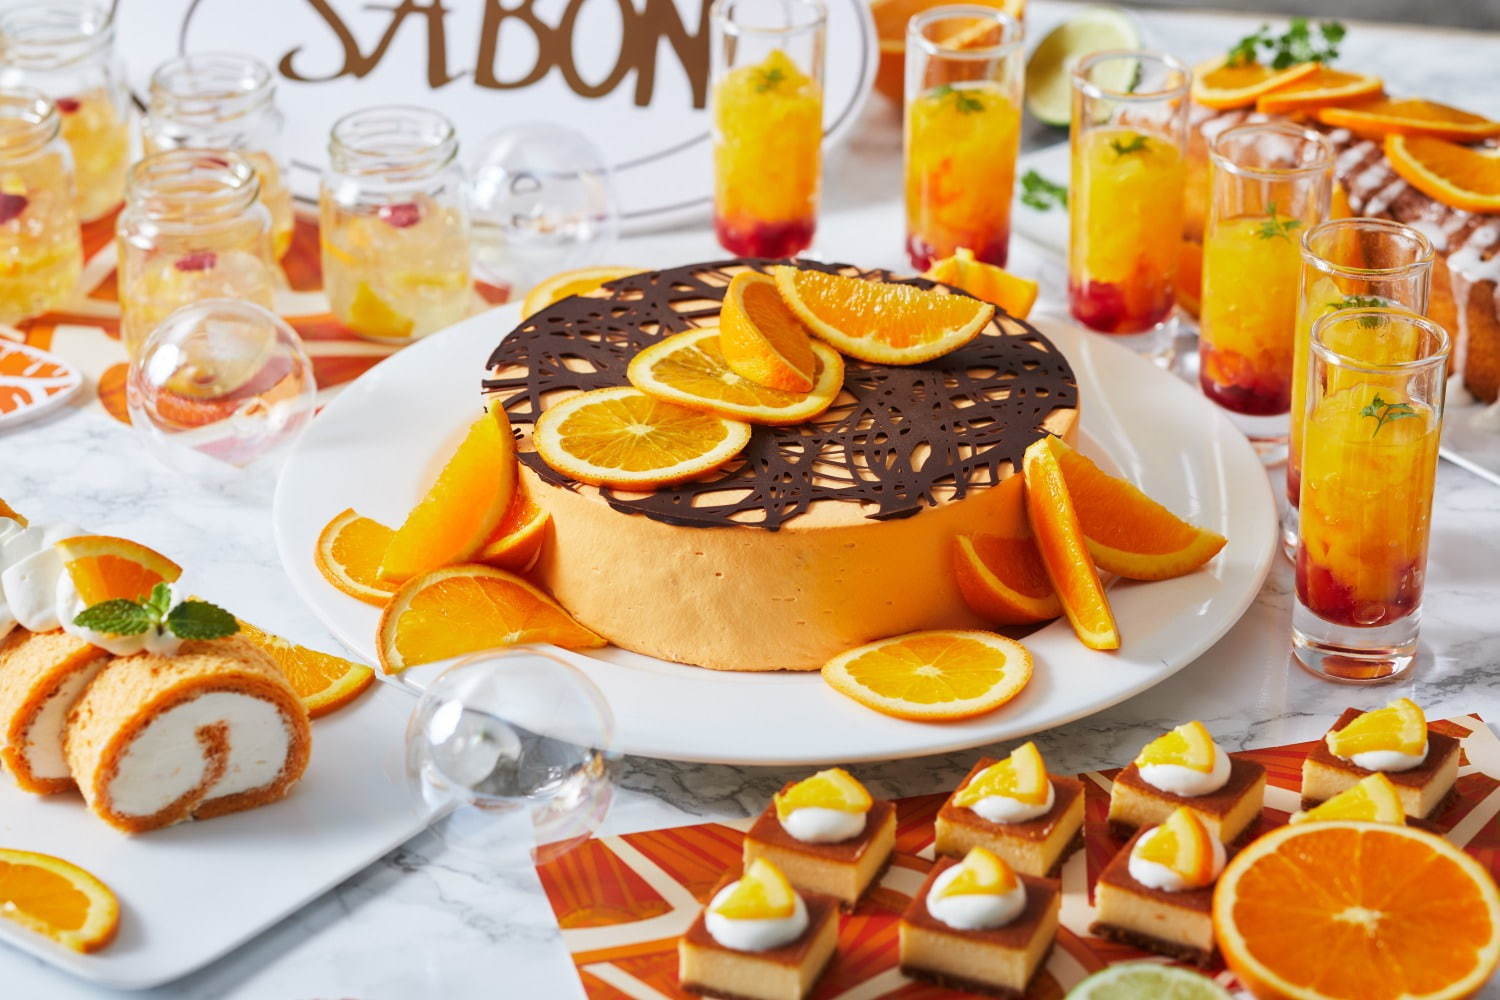 Sabonのスイーツビュッフェがザ ストリングス 表参道で ジンジャー オレンジのケーキやタルト ファッションプレス